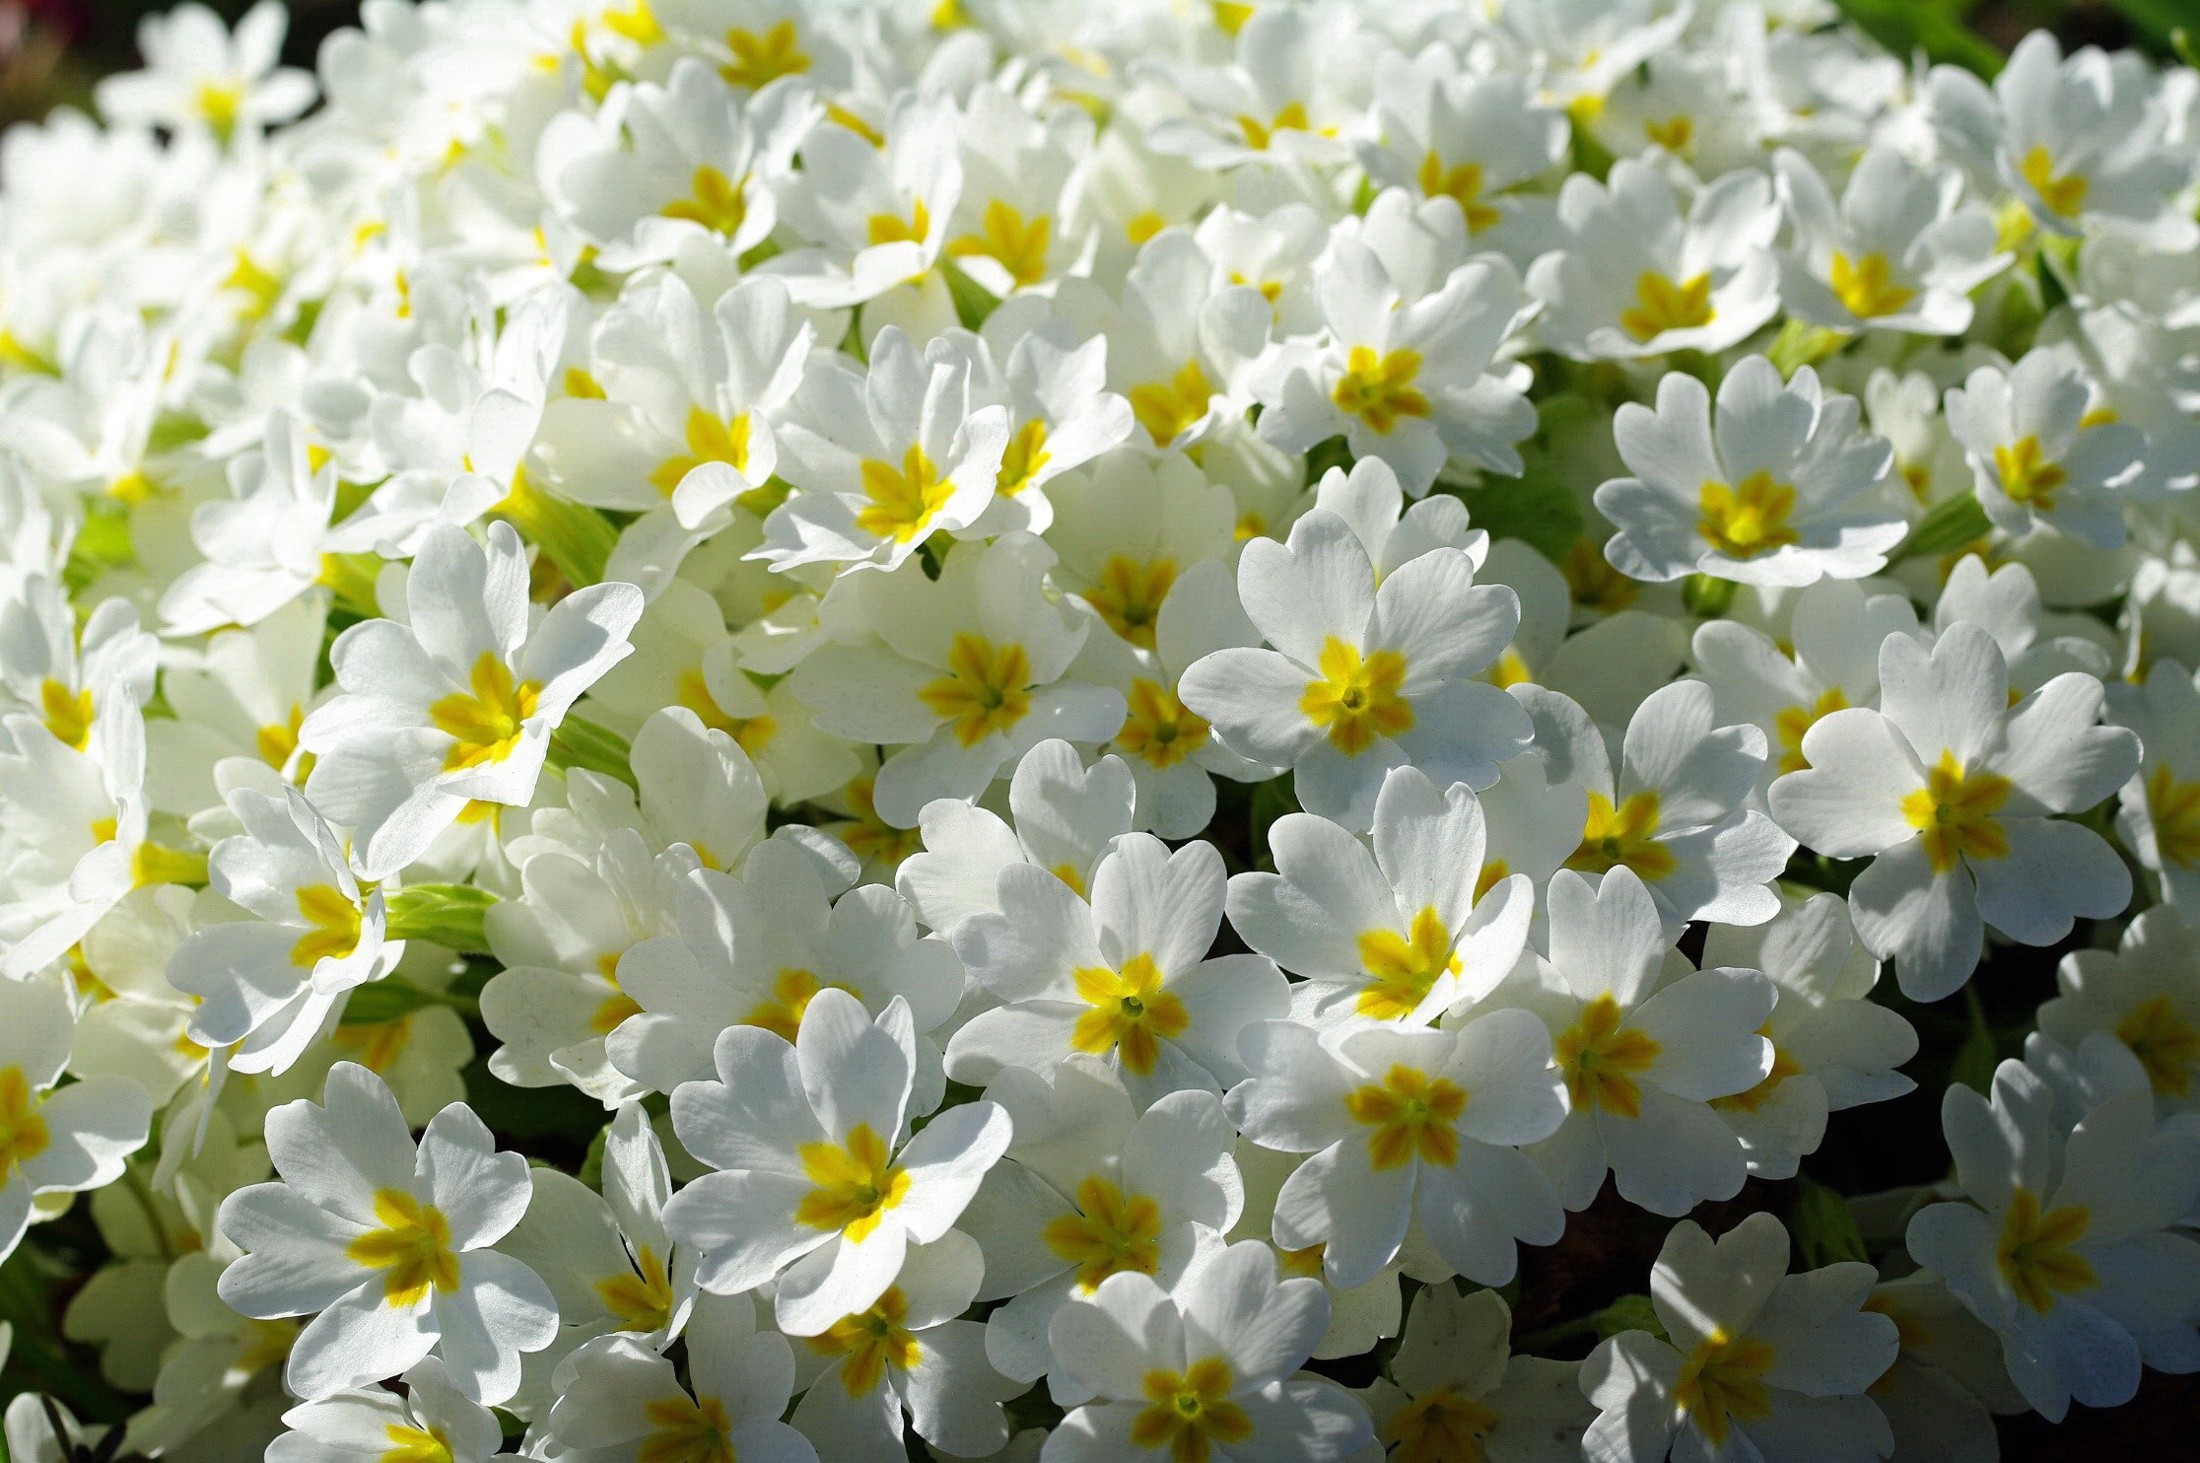 General 2200x1463 flowers white flowers plants